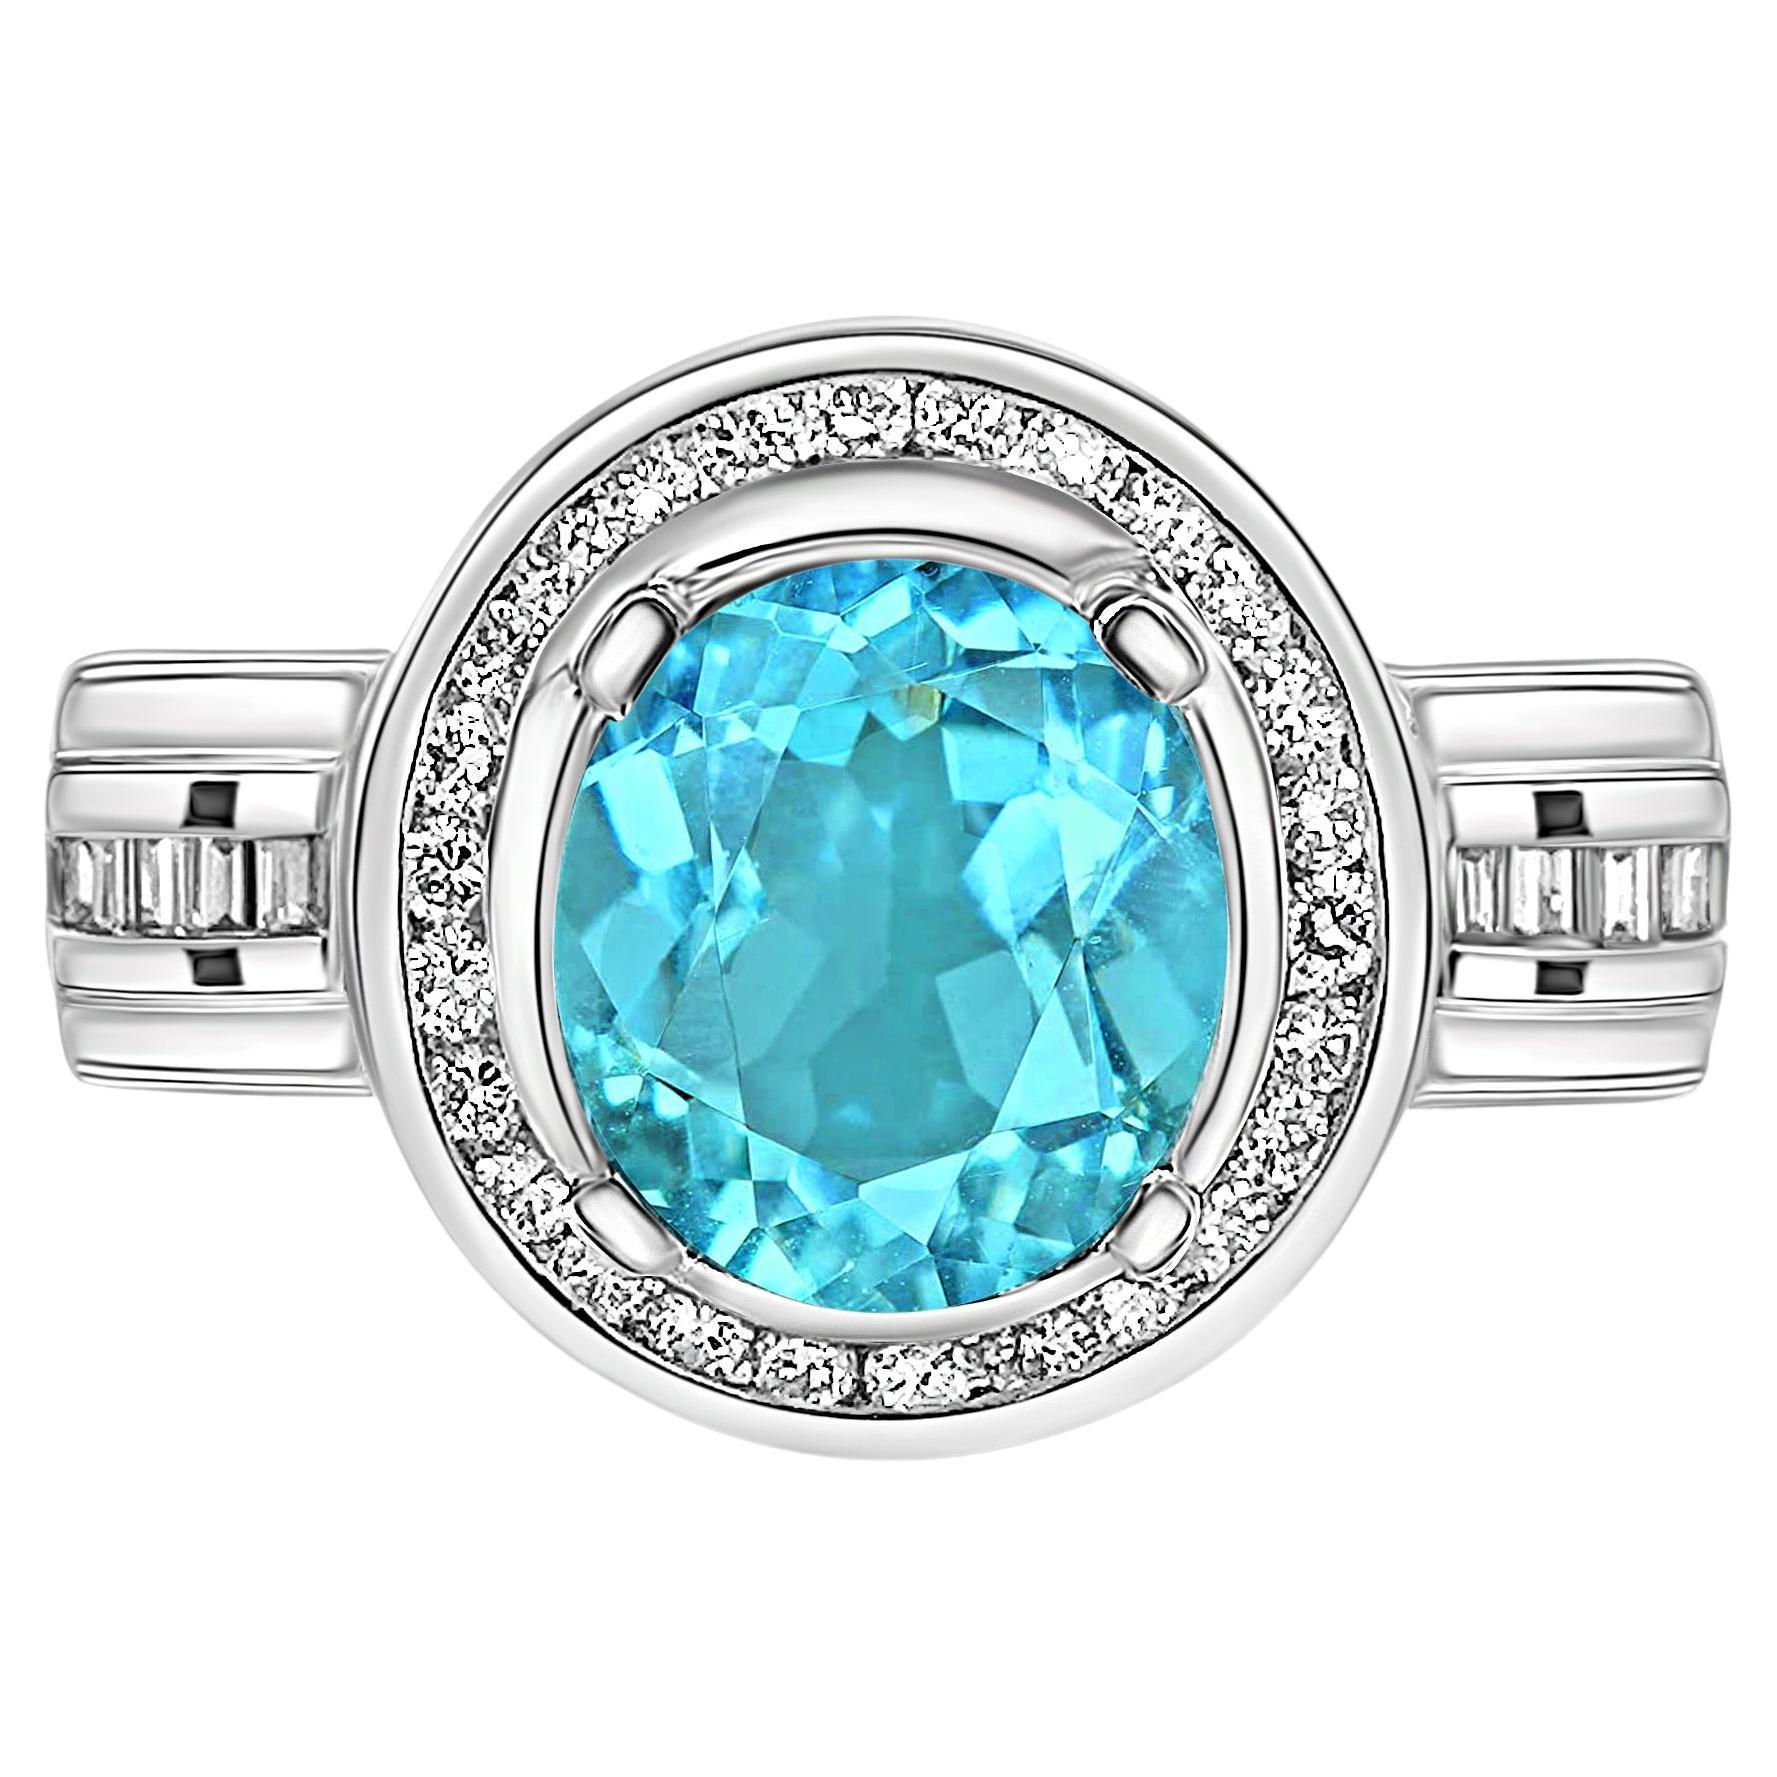 8 Carat Blue Zircon with Diamond Halo in Platinum & 18K Gold Filigree Ring 